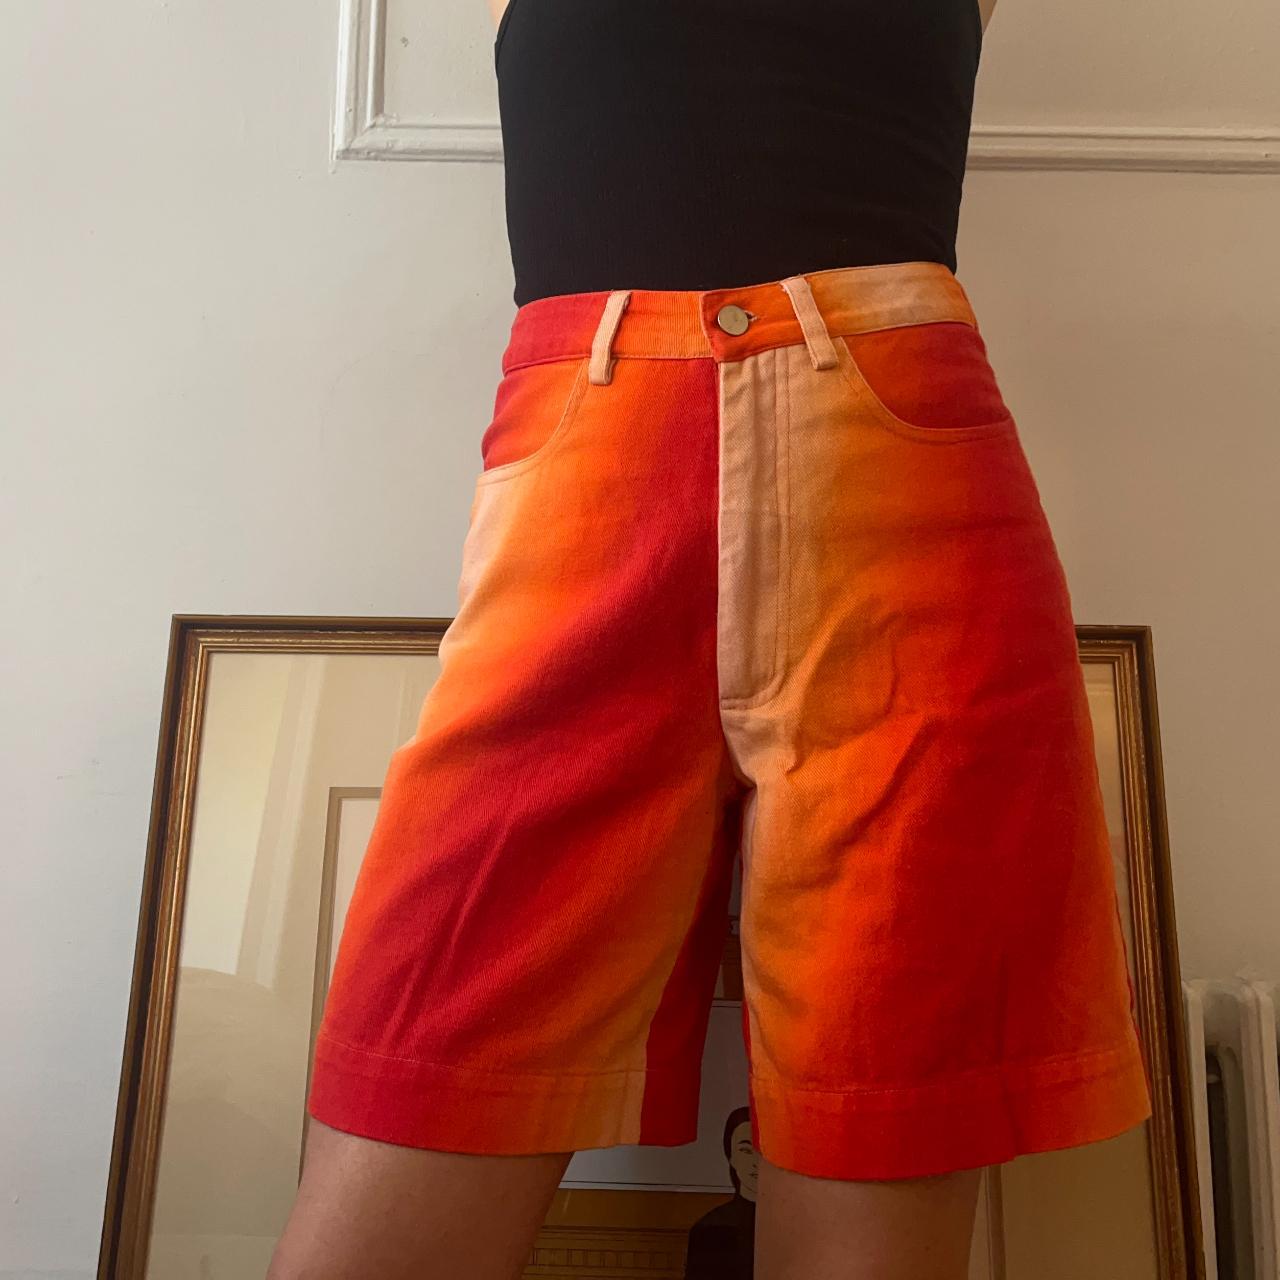 Hosbjerg Women's Orange Shorts